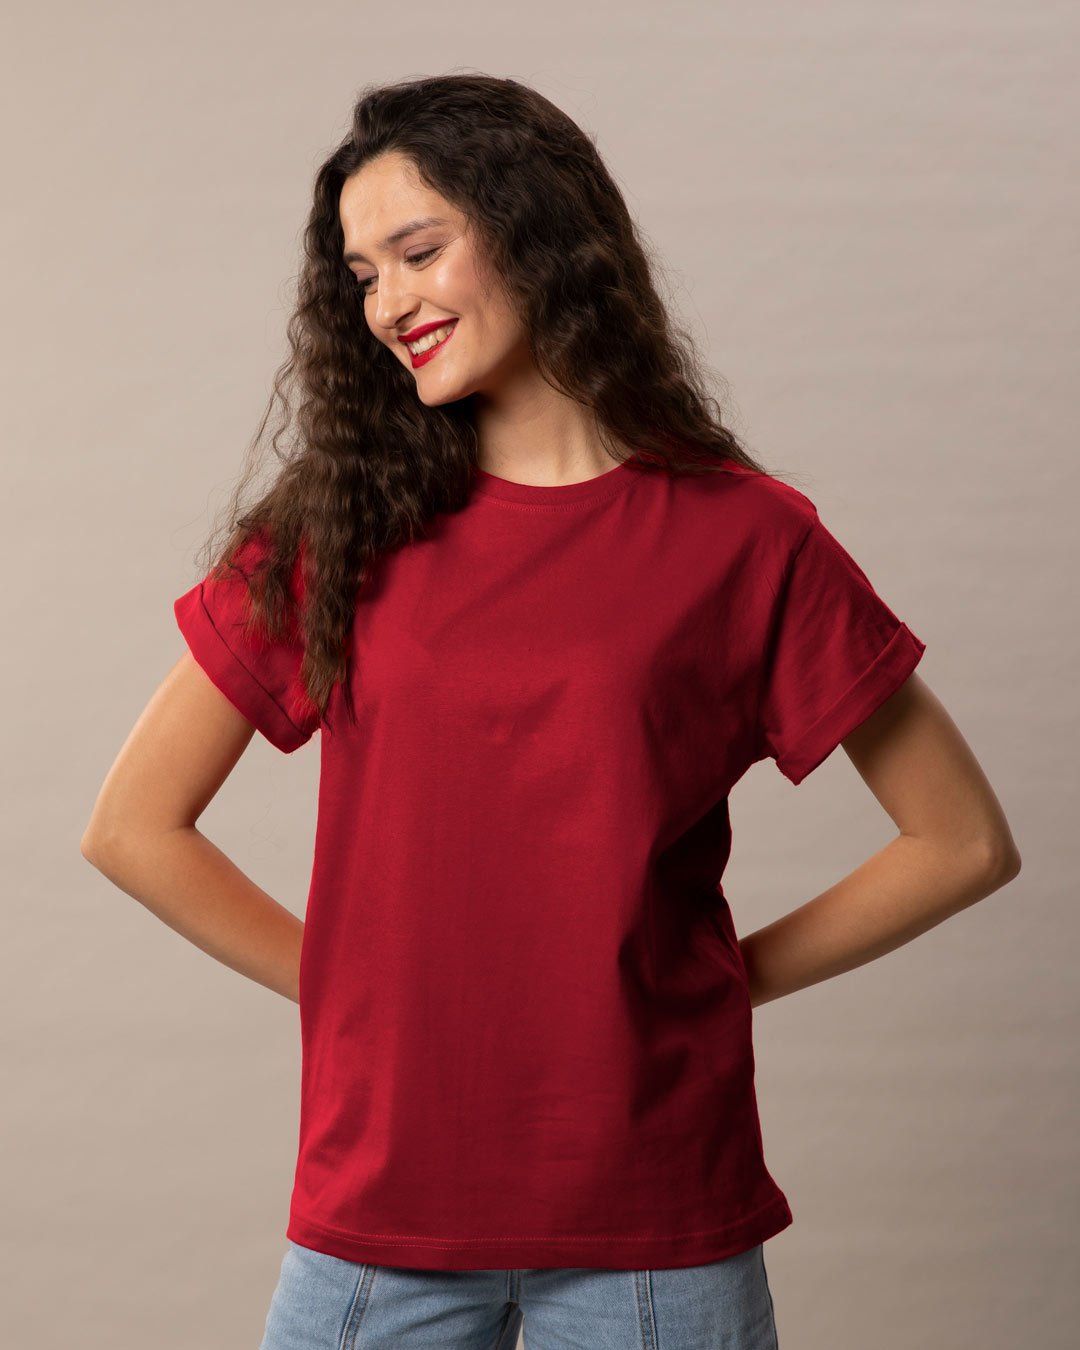 bold-red-boyfriend-t-shirt-women-s-plain-boyfriend-t-shirts-170465-1530354173 for her Strong Red